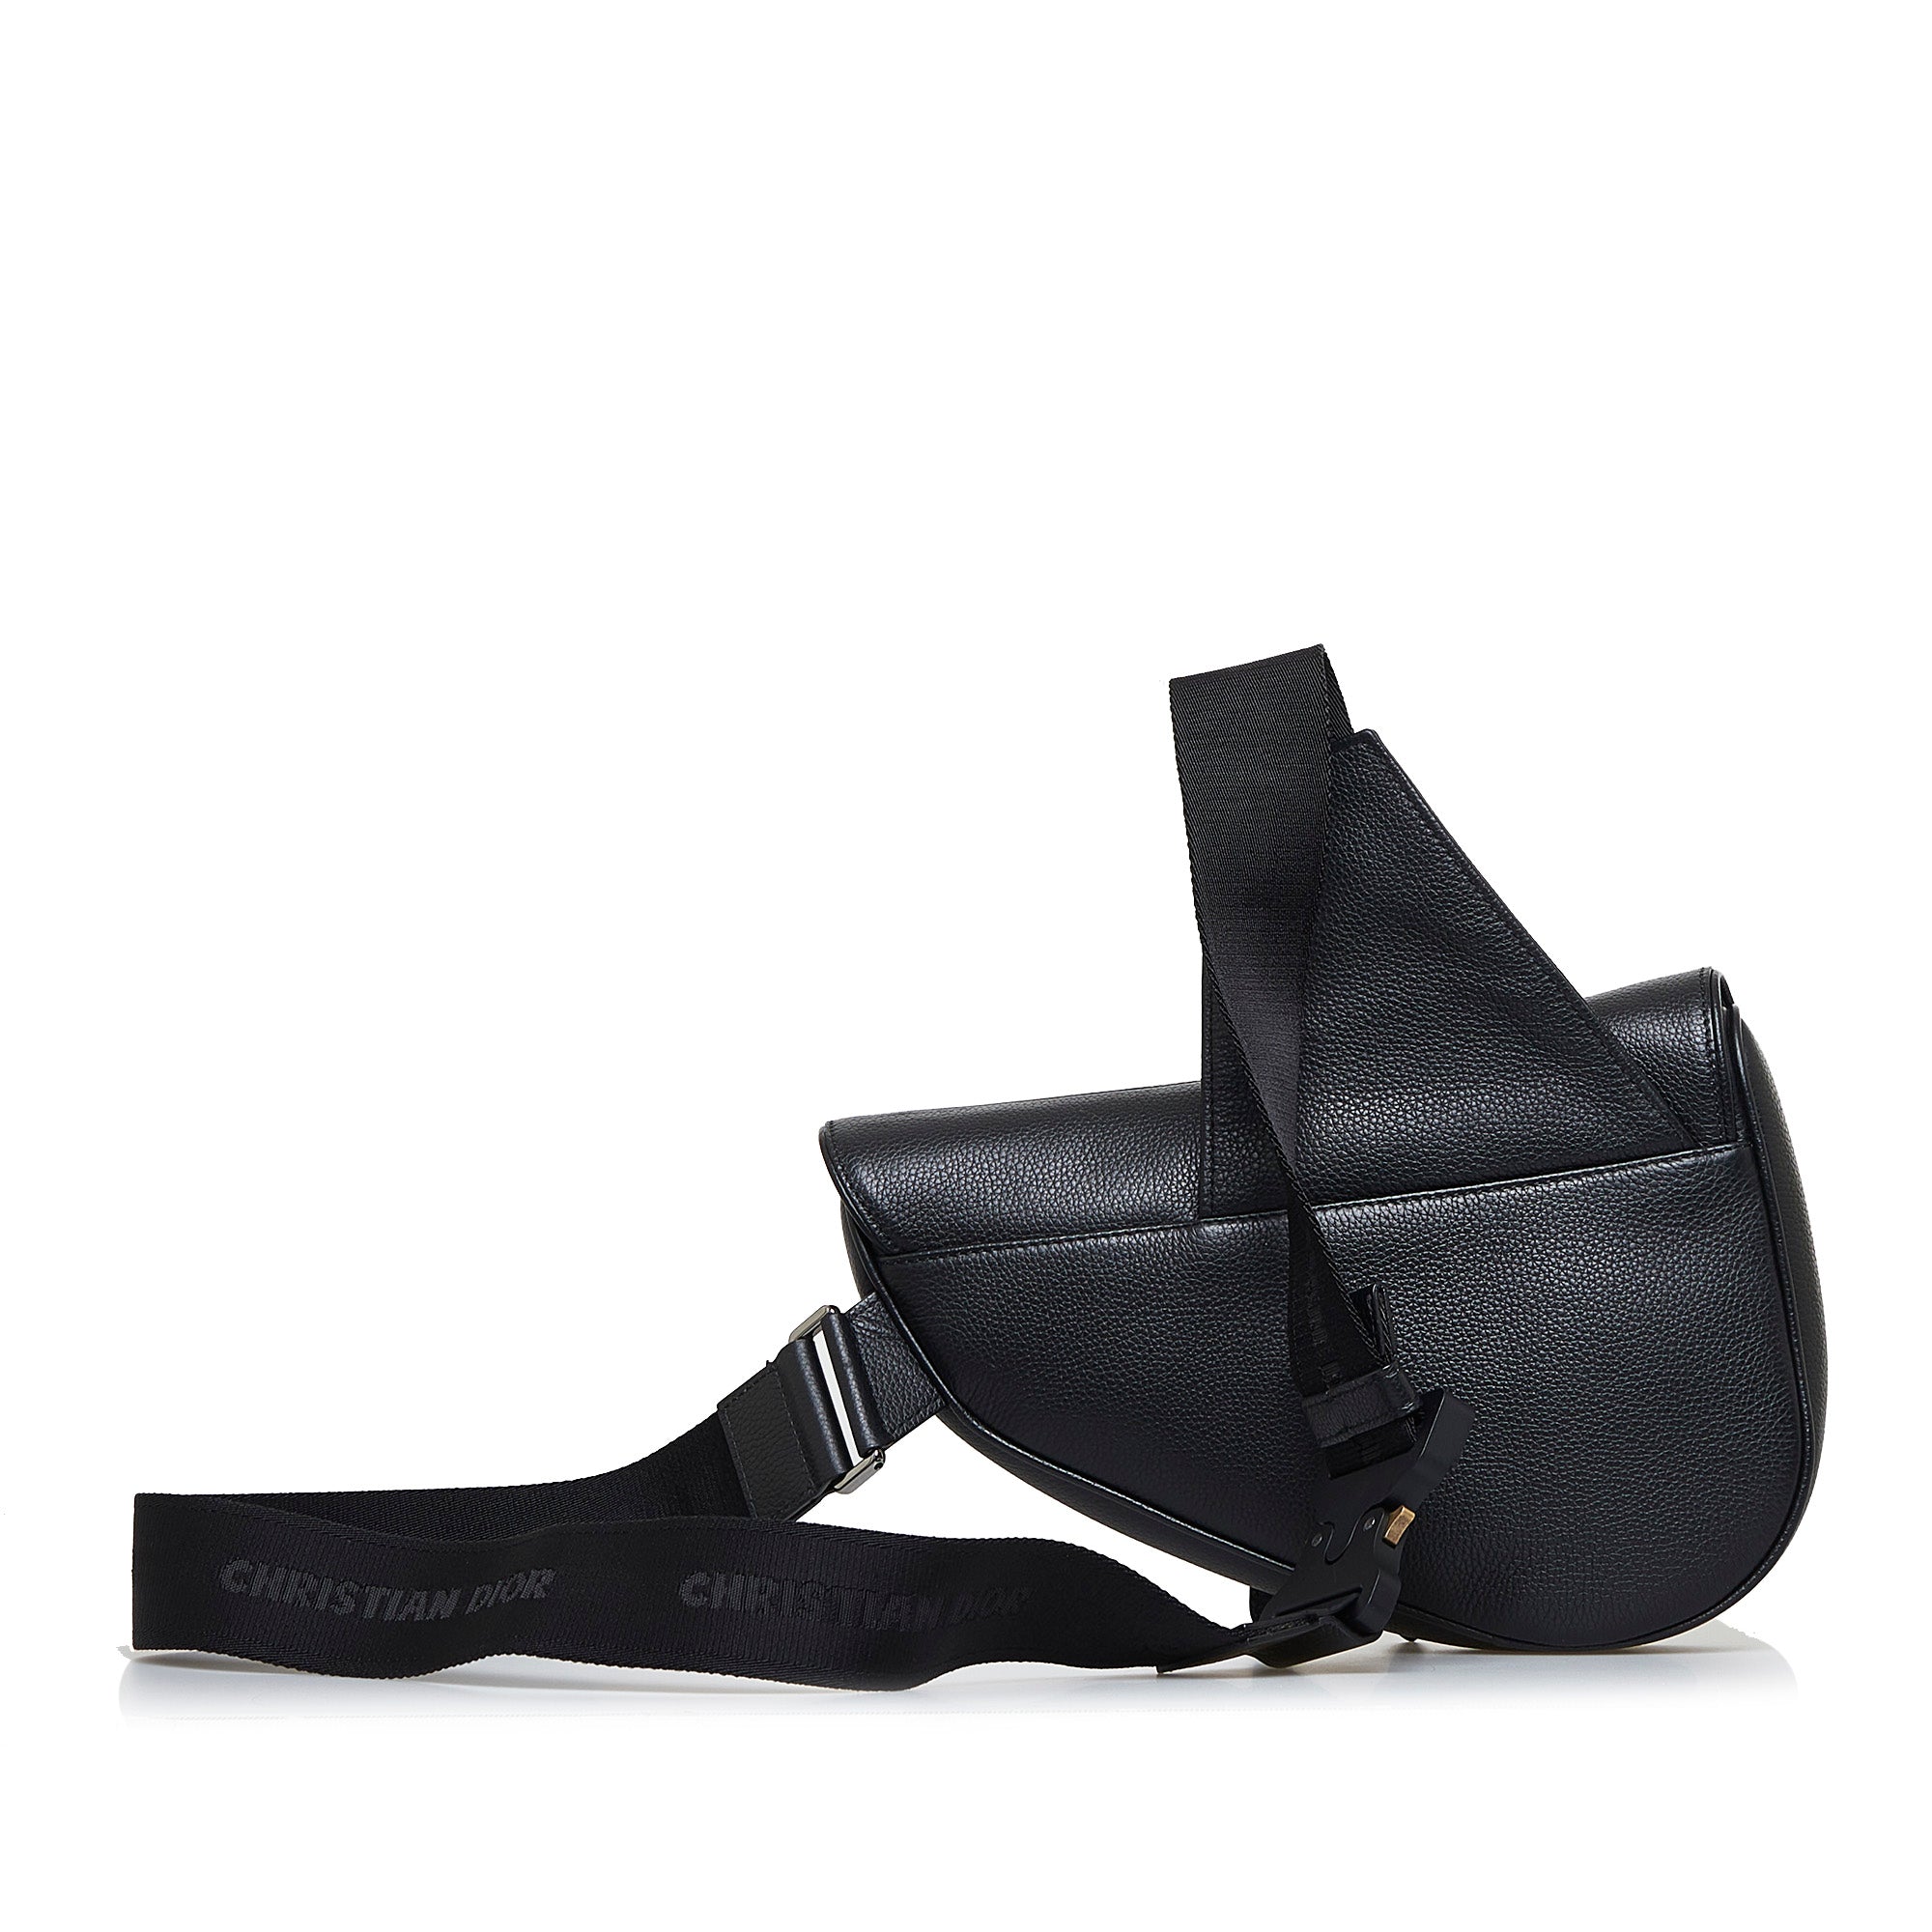 Dior x Stussy Saddle Bag Black Calfskin Limited Edition